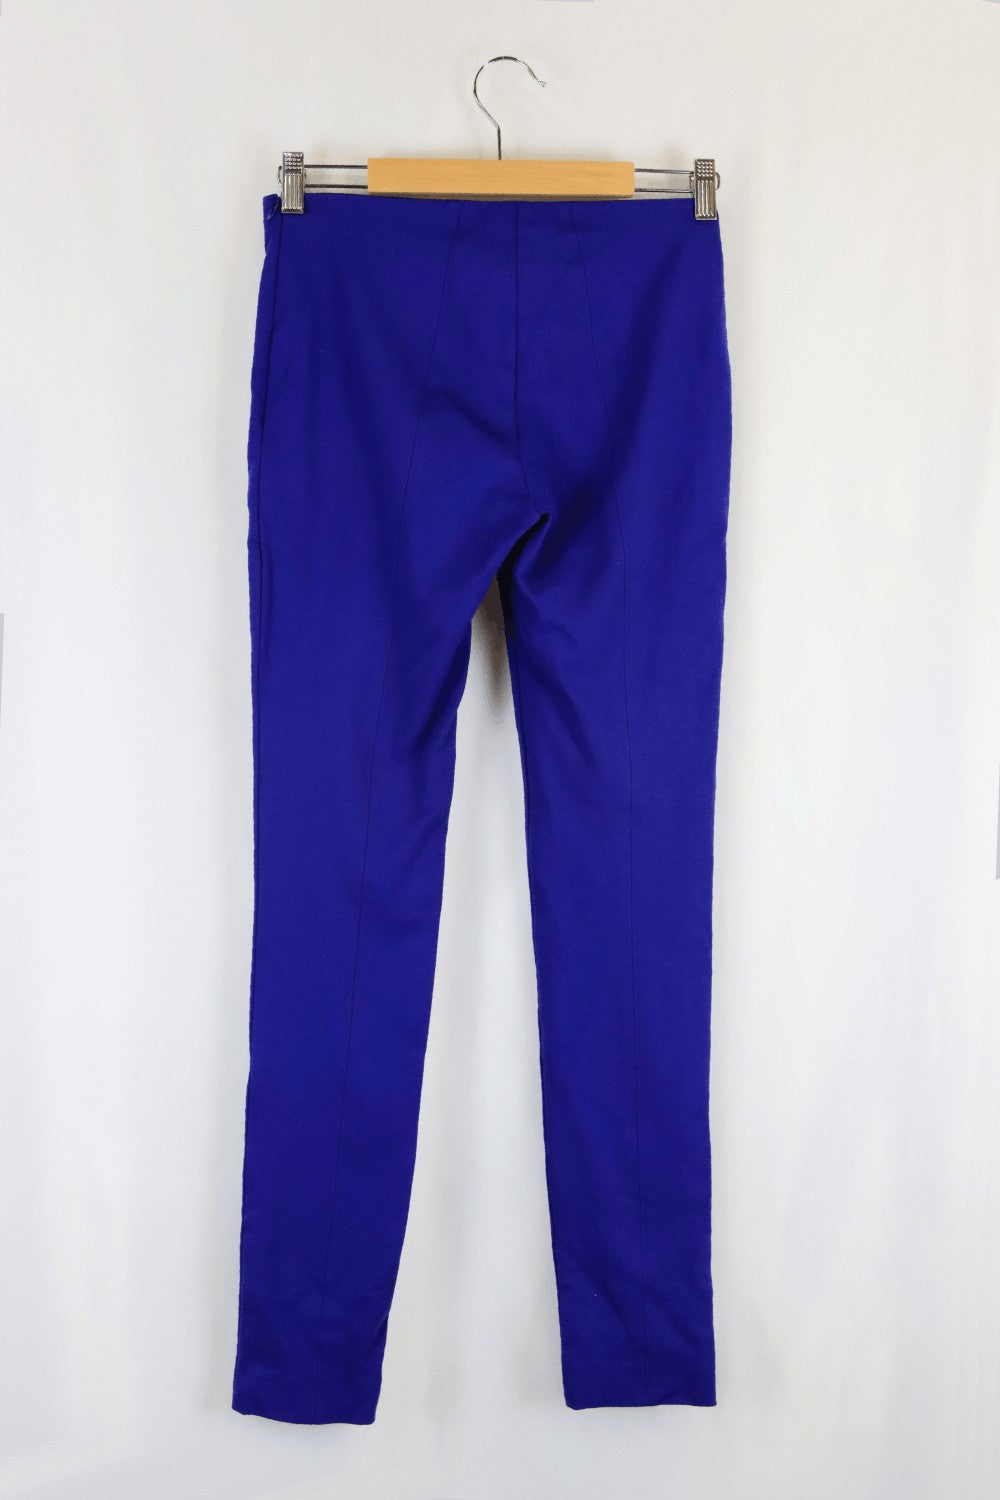 Missoni Blue Pants 40 (10)